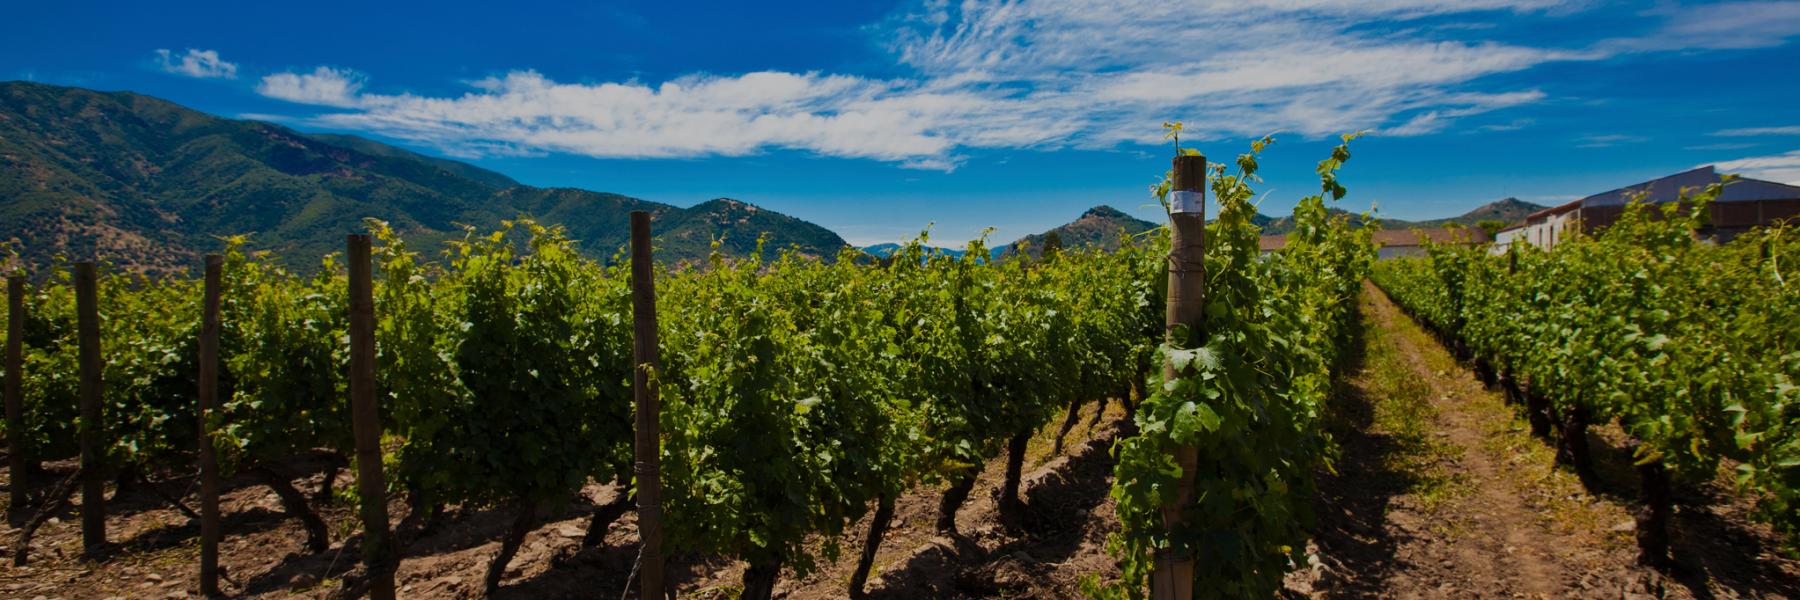 Alcance estate vineyards, Valle del Maul, Chile 